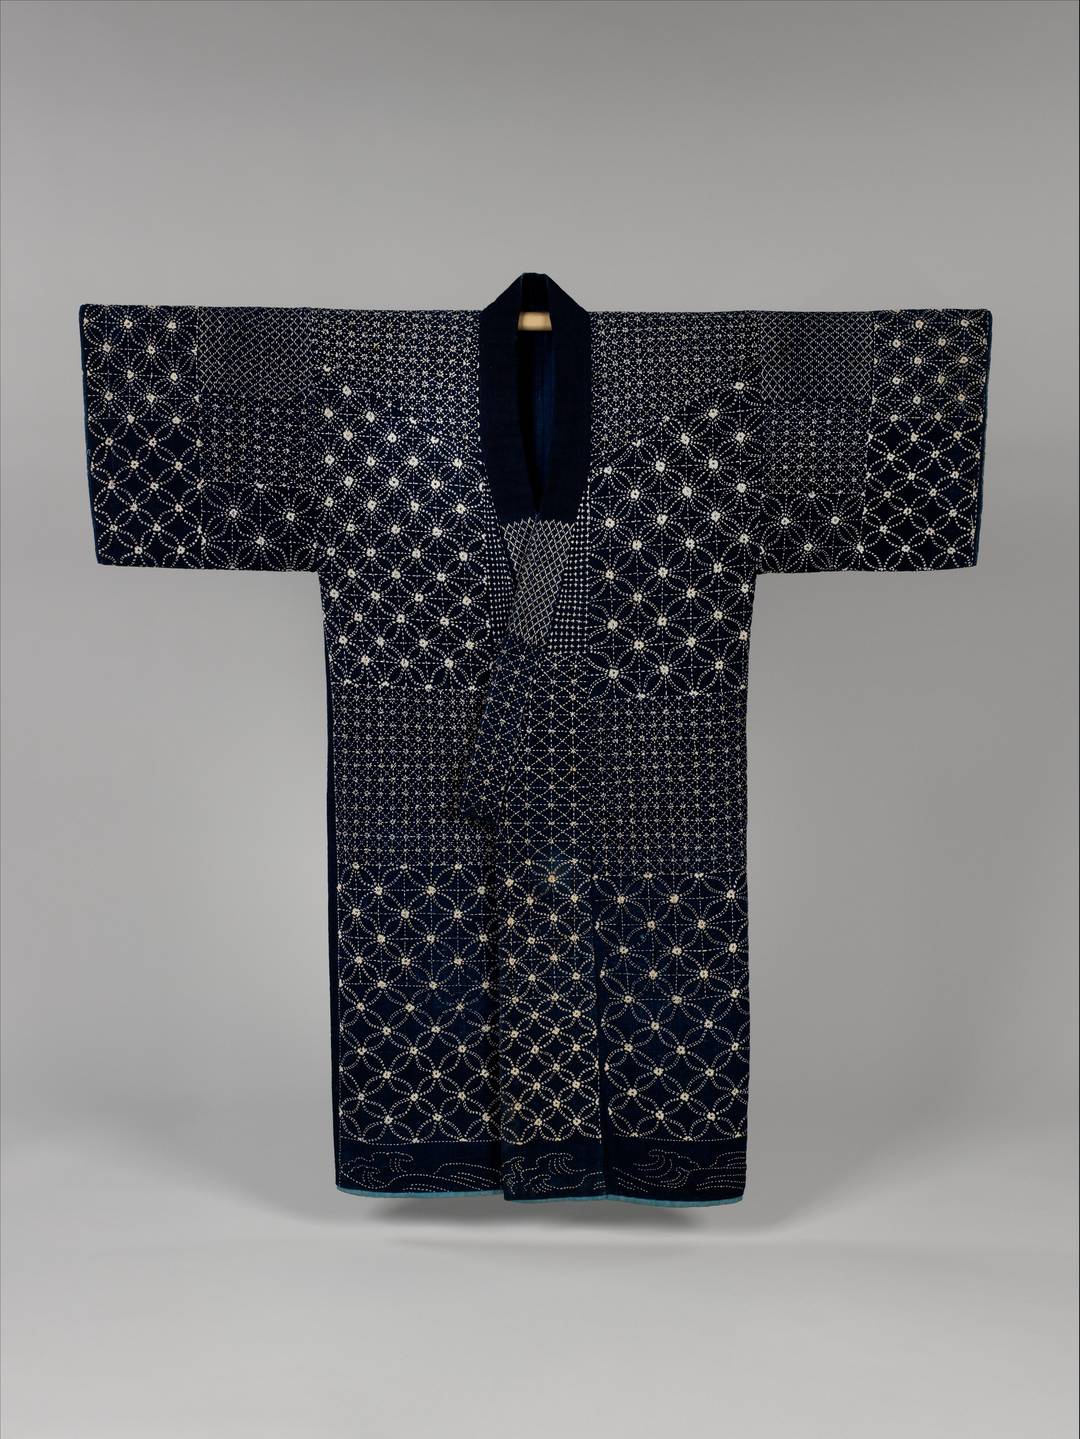 Sashiko-kimono, eind negentiende eeuw.